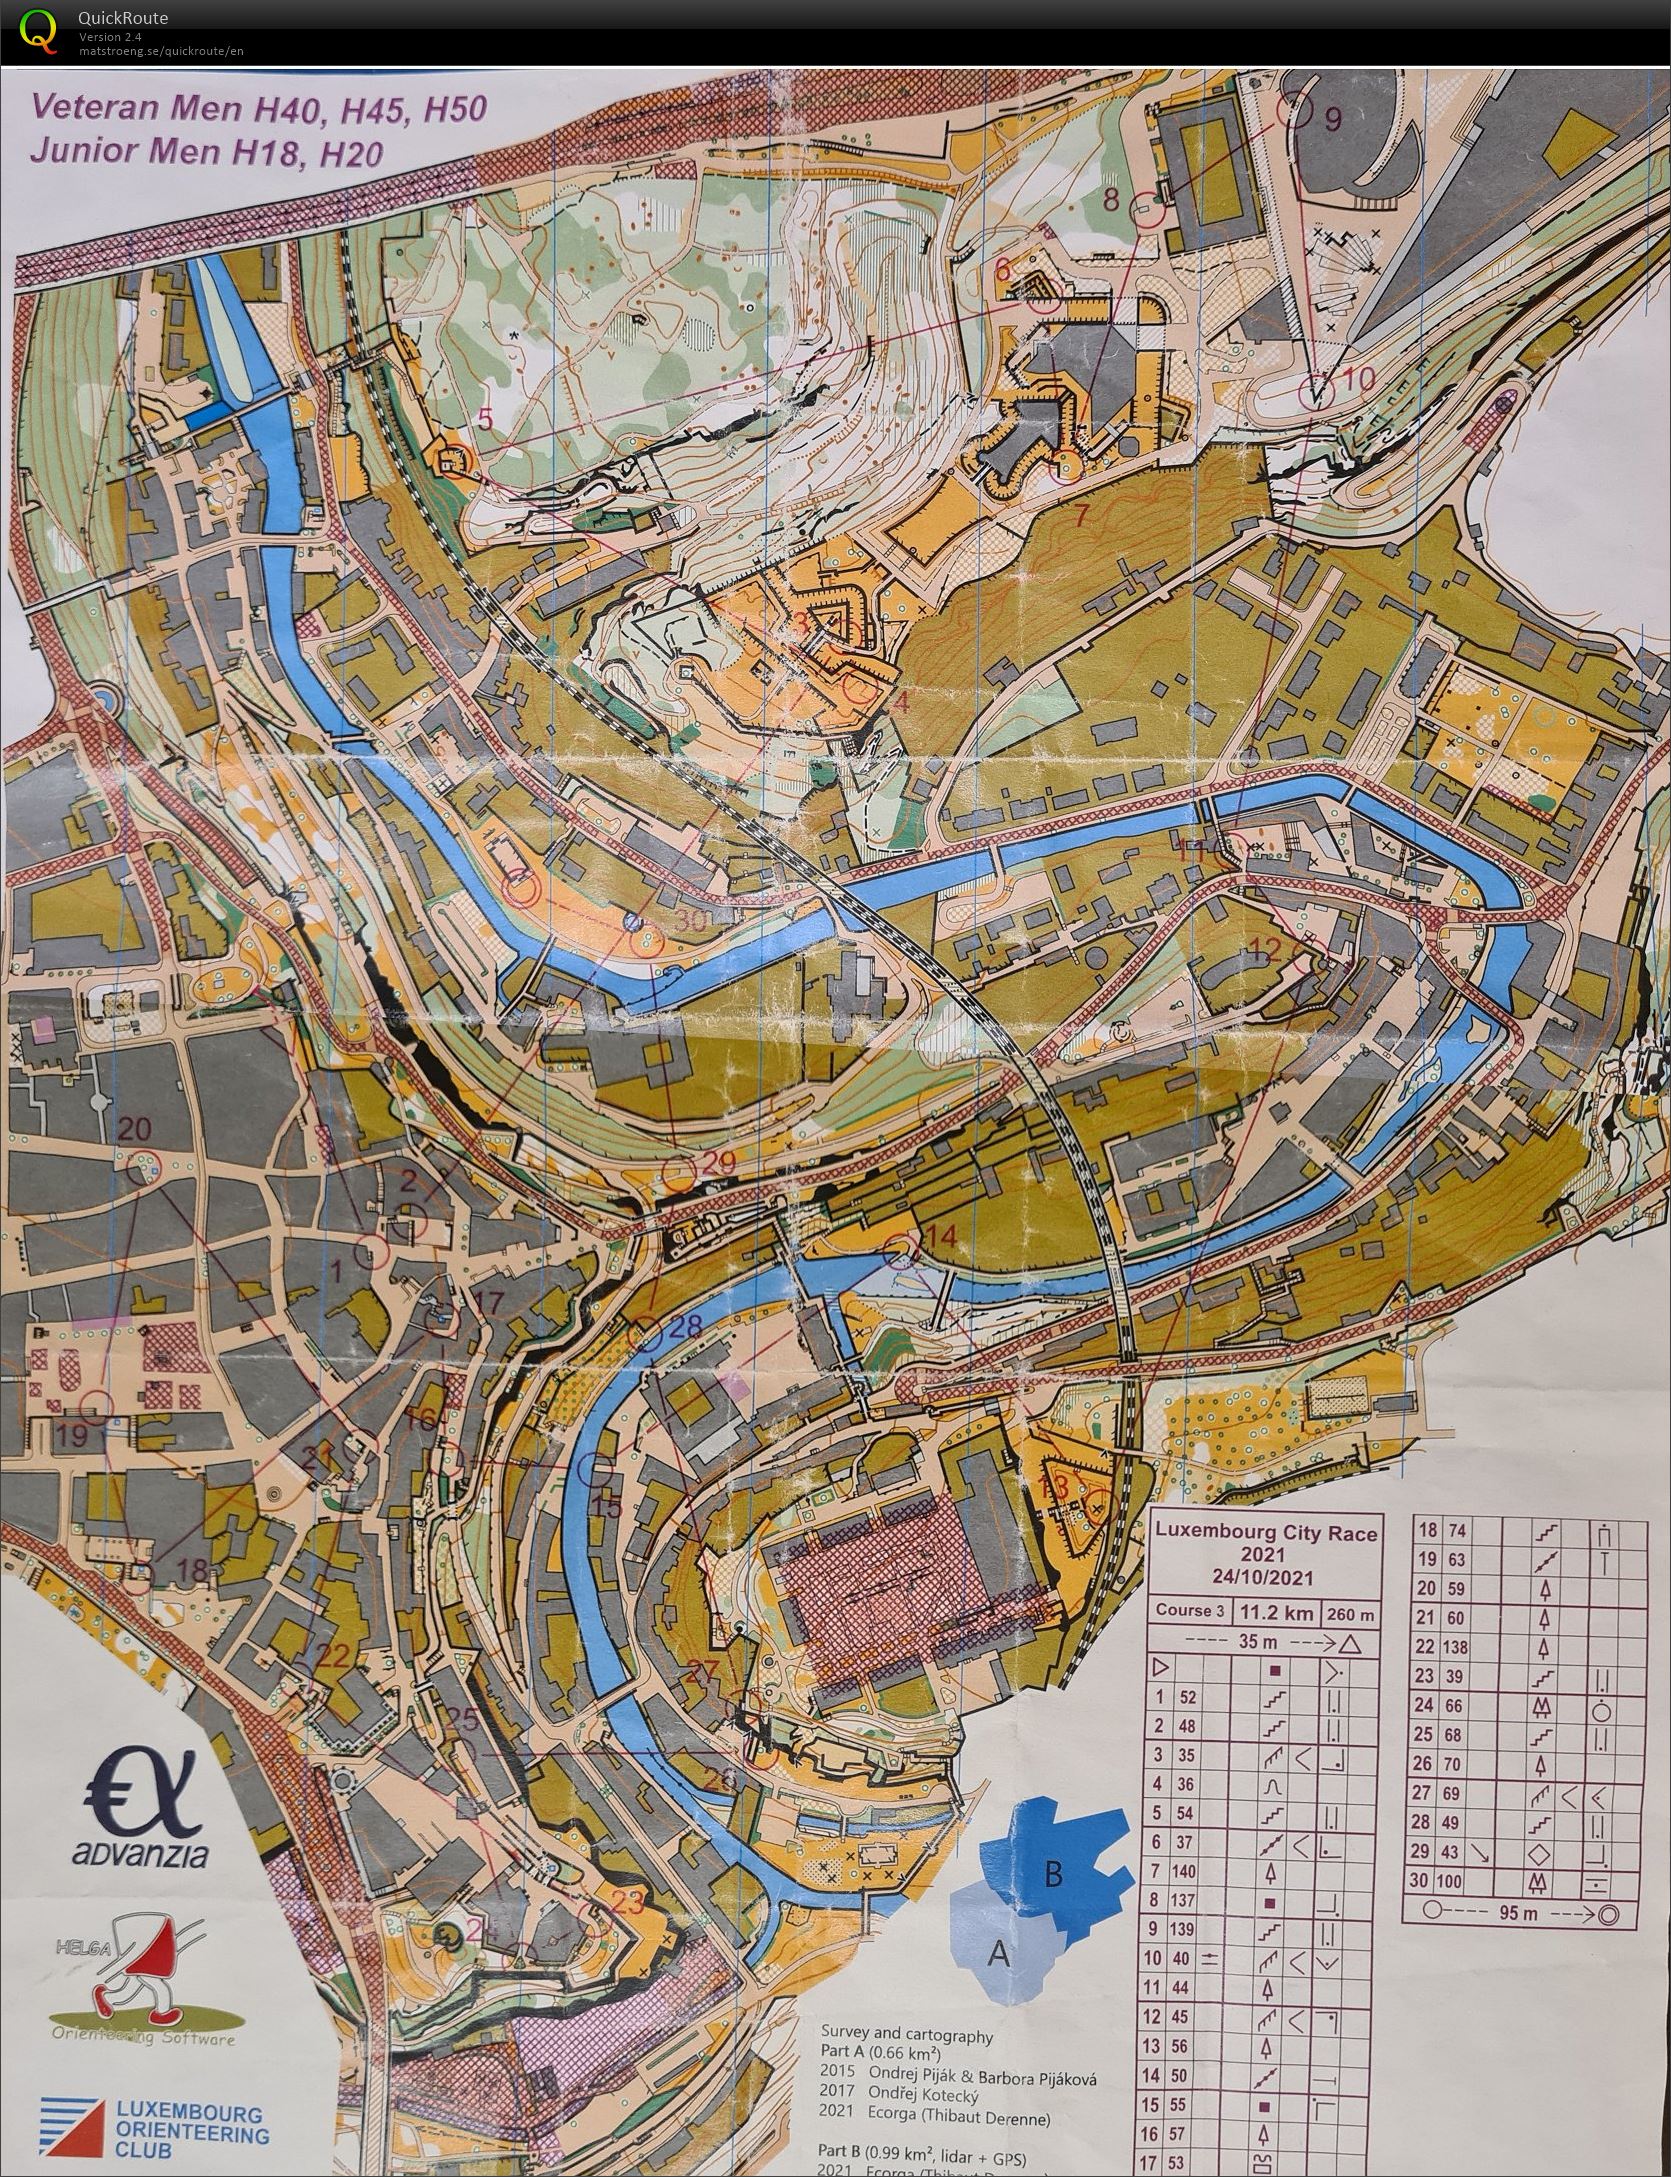 Luxemburg City Race, Long, M50 (2021-10-24)